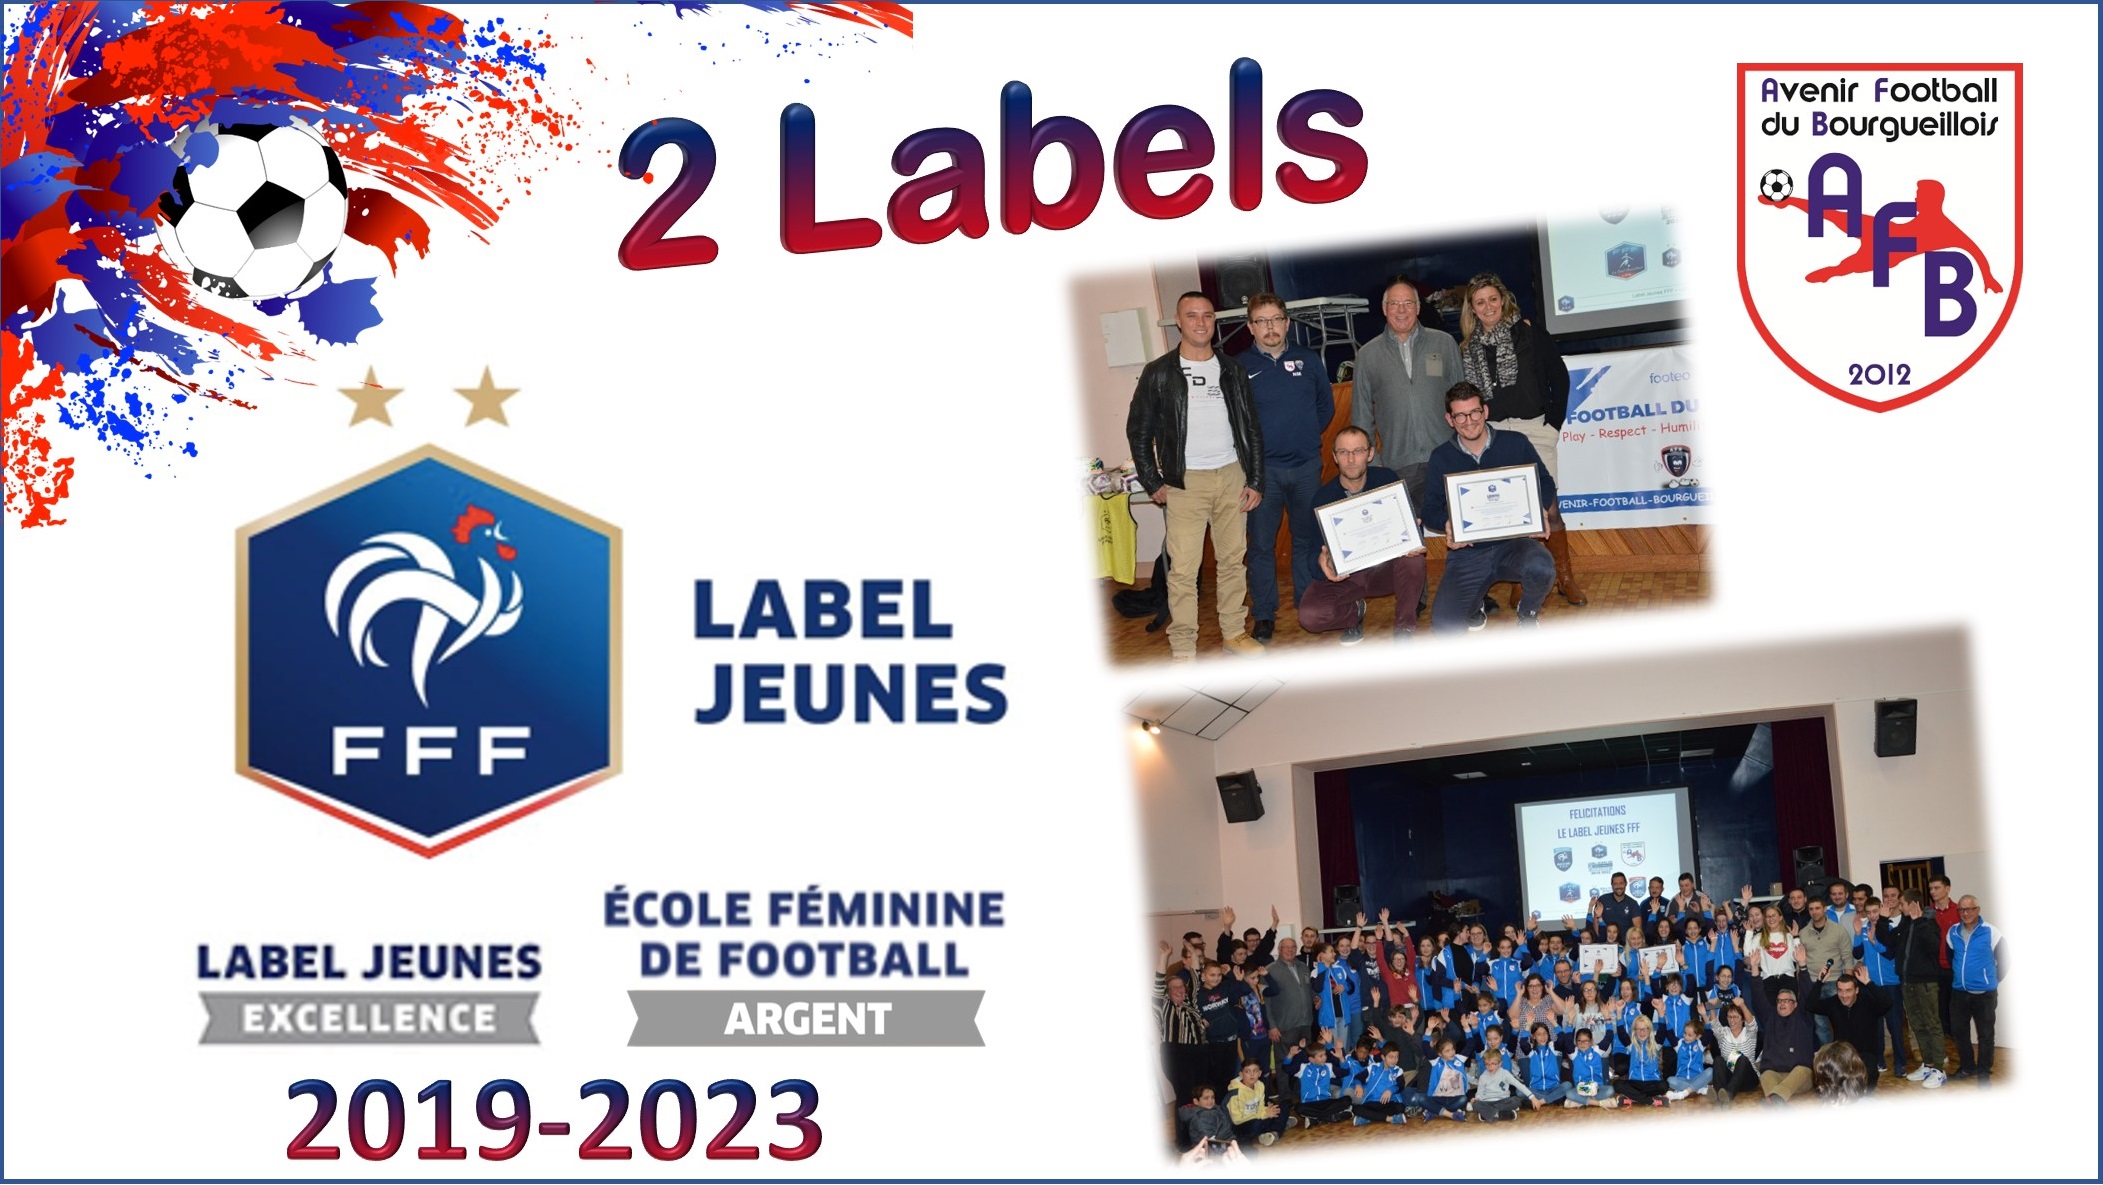 L Afb C Est 2 Labels Fff Club Football Avenir Football Bourgueillois Footeo